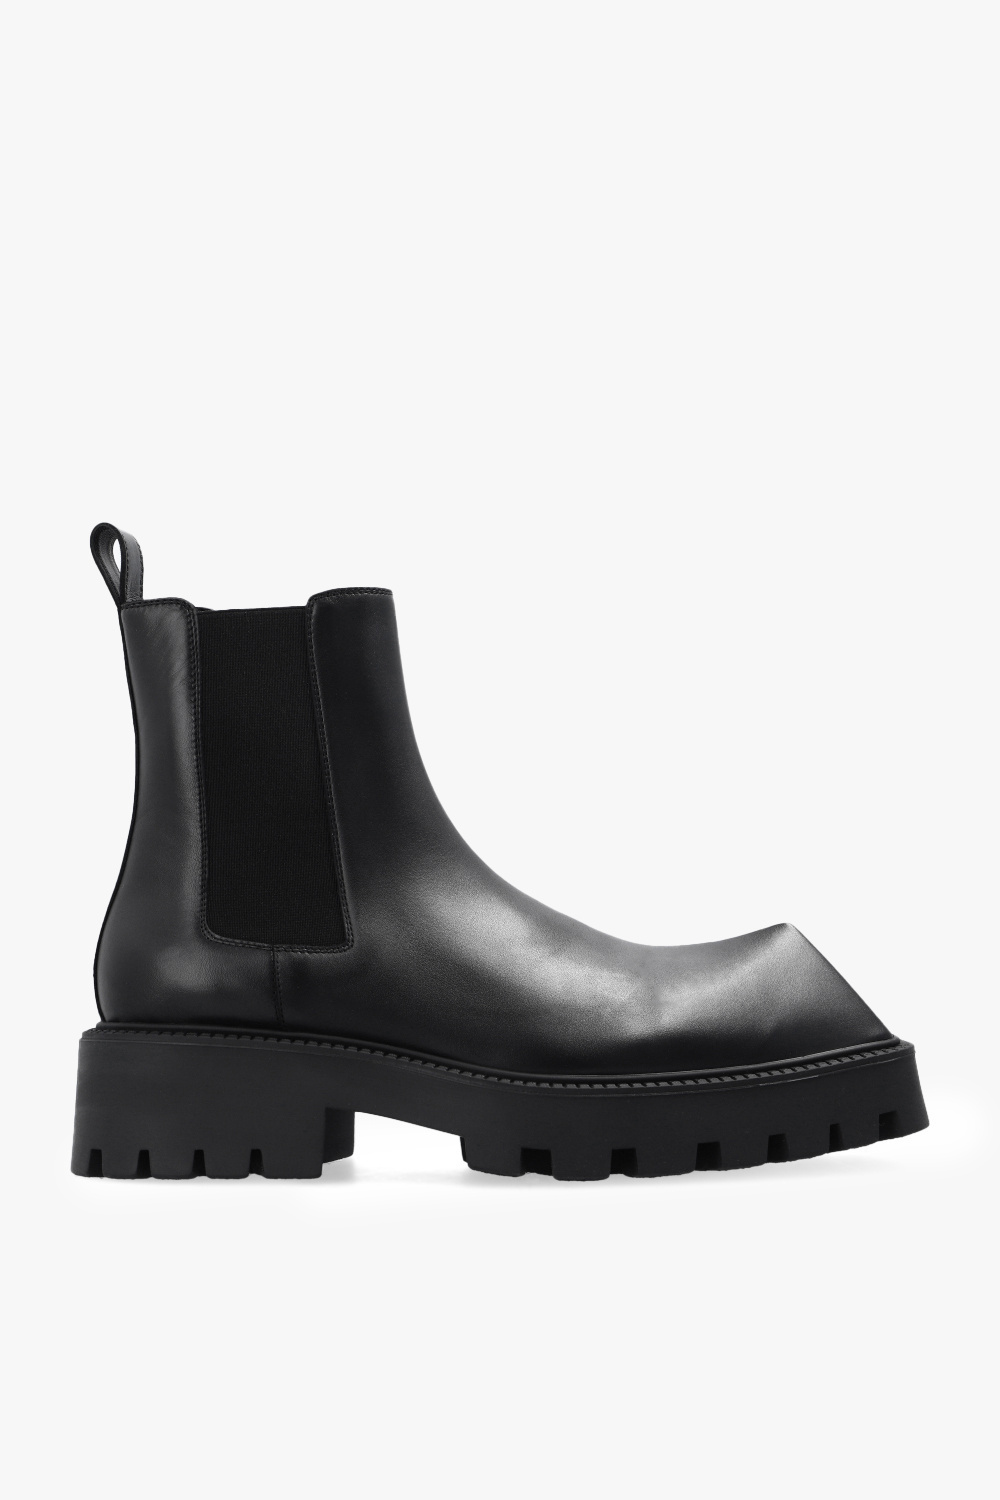 Balenciaga ‘Rhino’ Chelsea boots | Men's Shoes | Vitkac